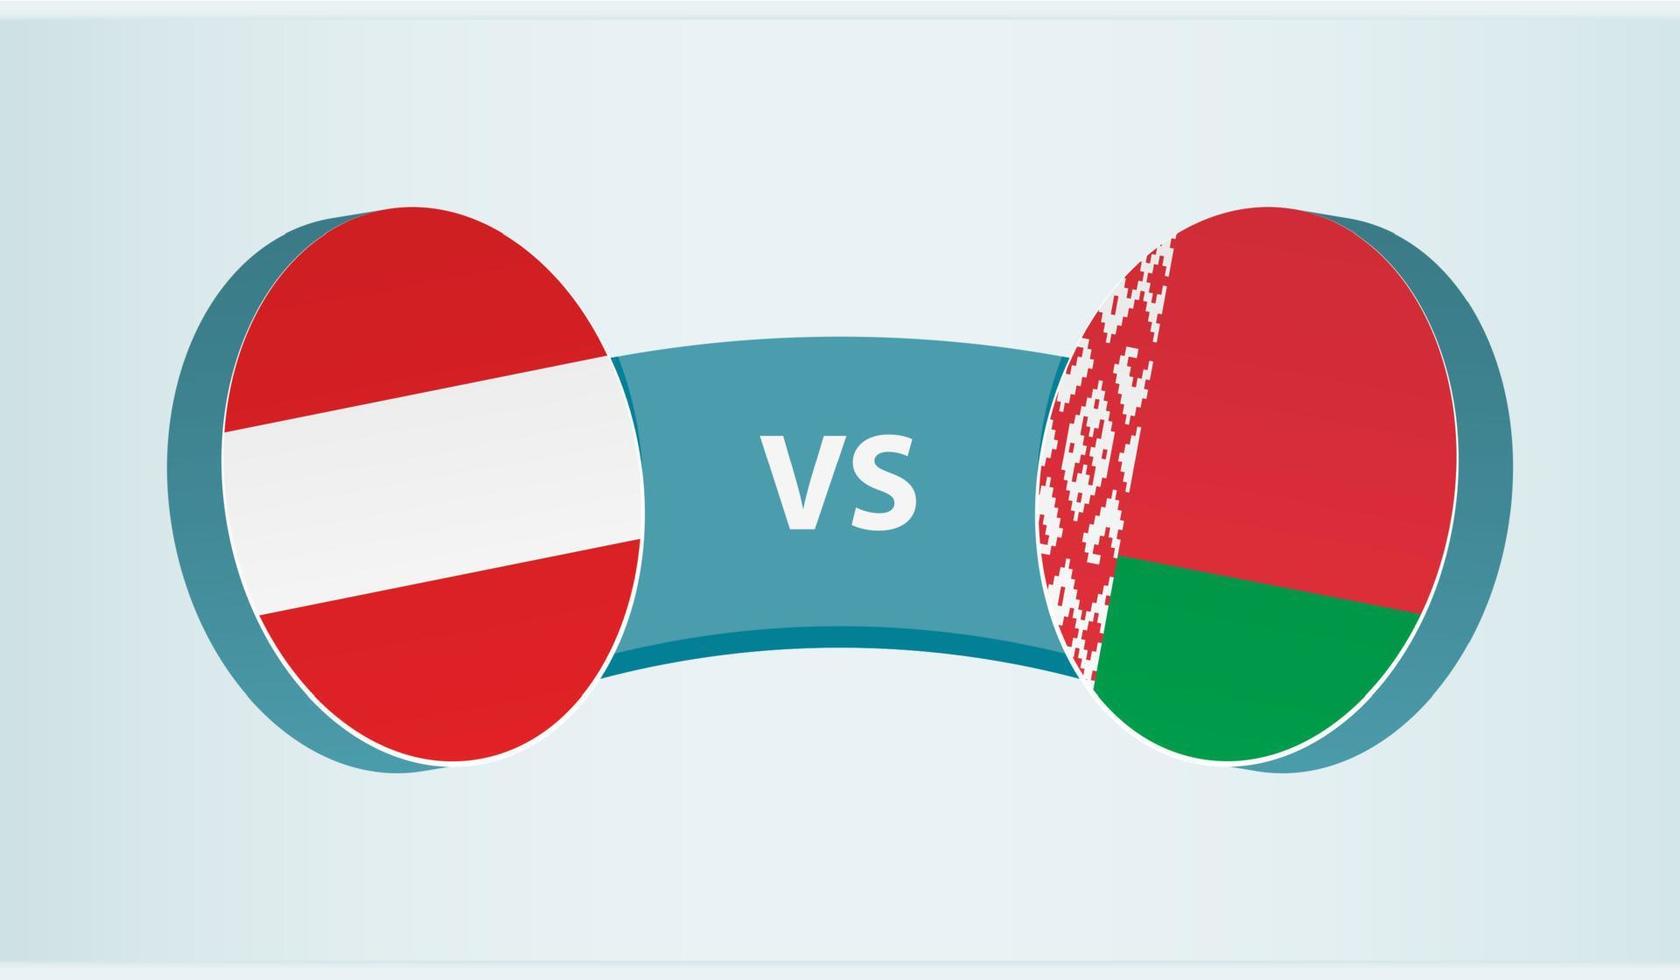 Austria versus Belarus, team sports competition concept. vector